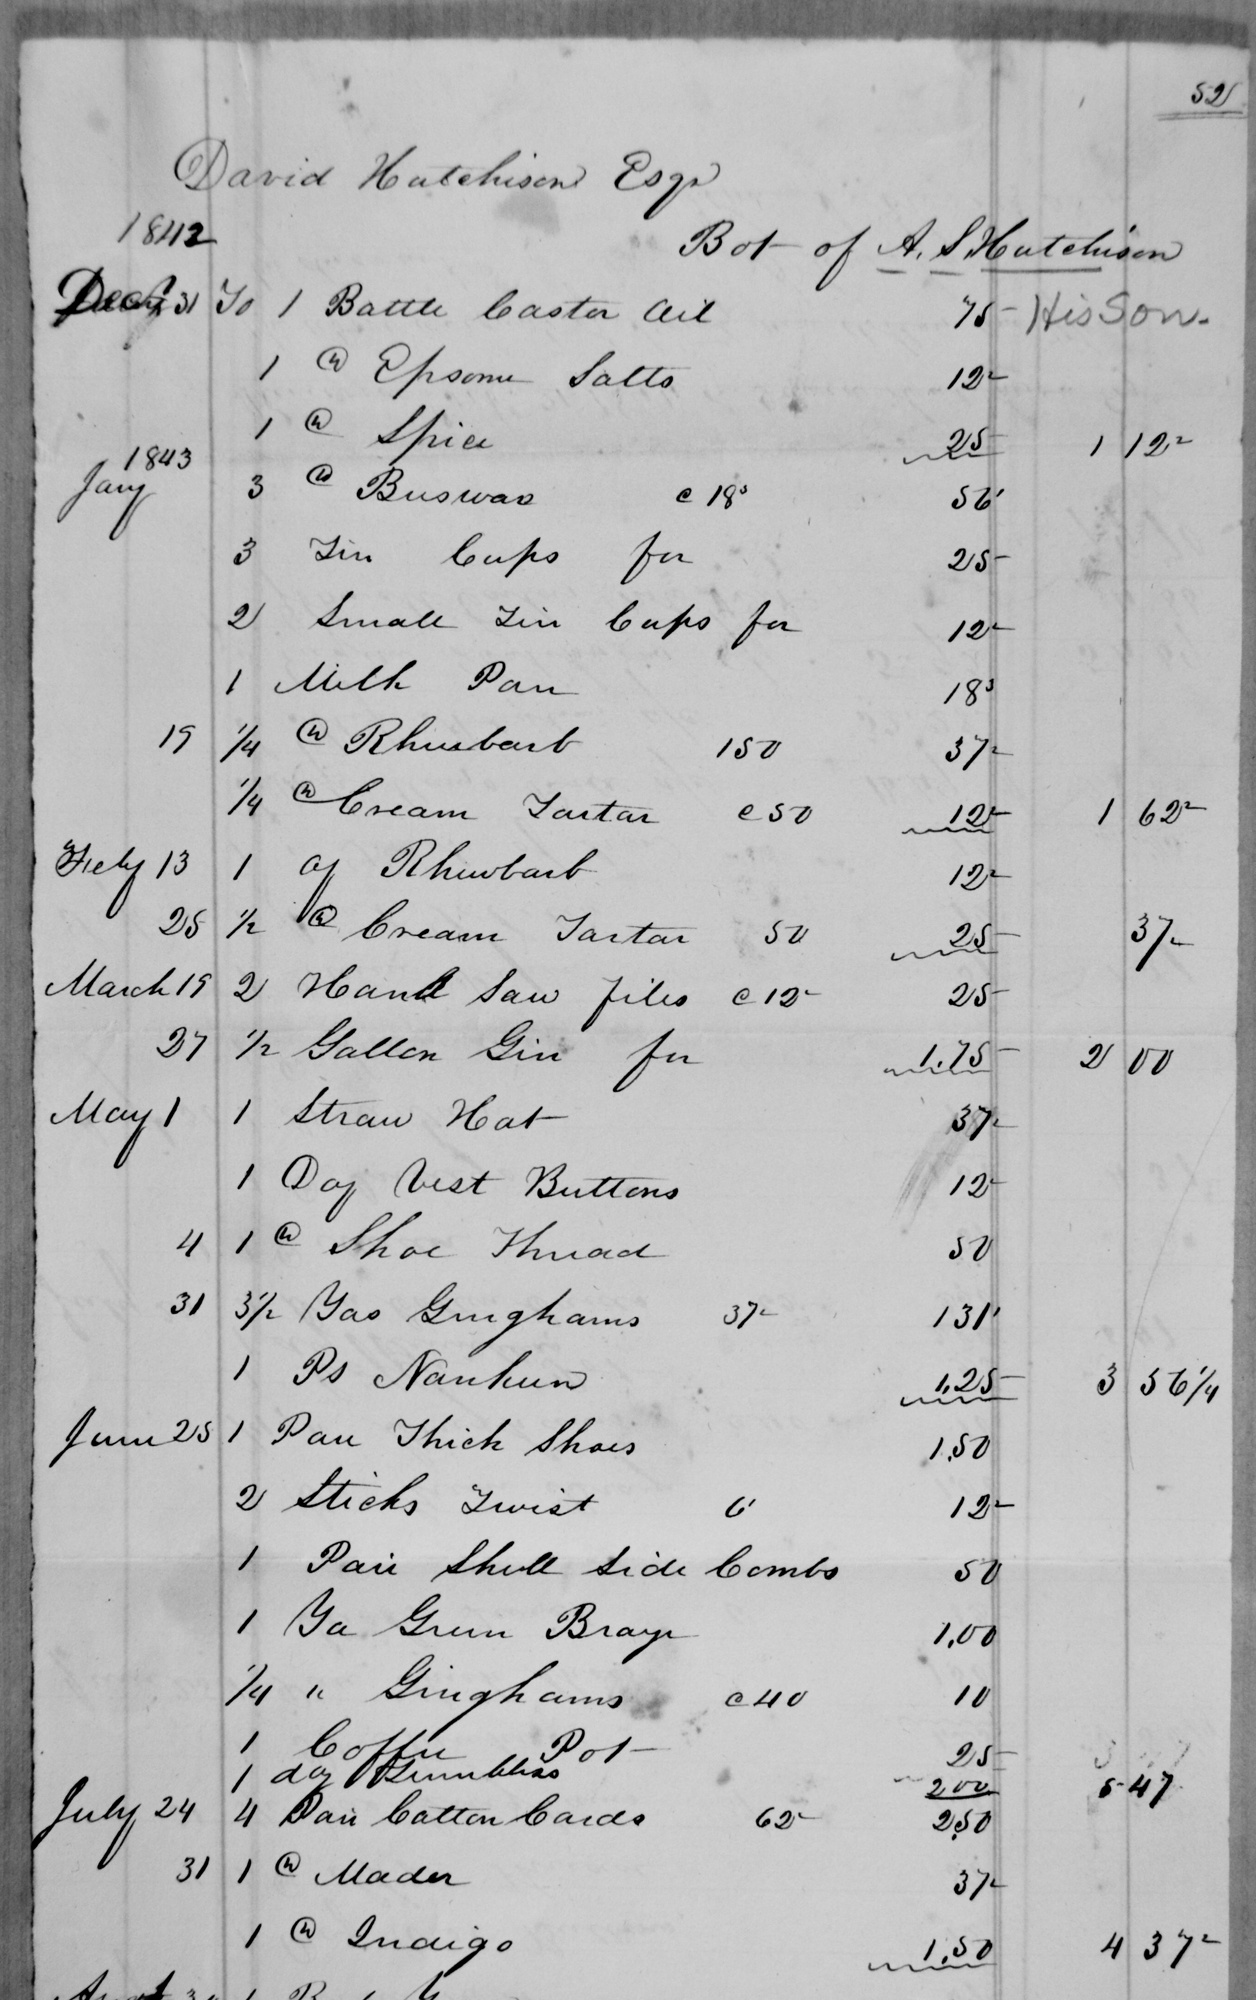 David Hutchison Store Account - 1842